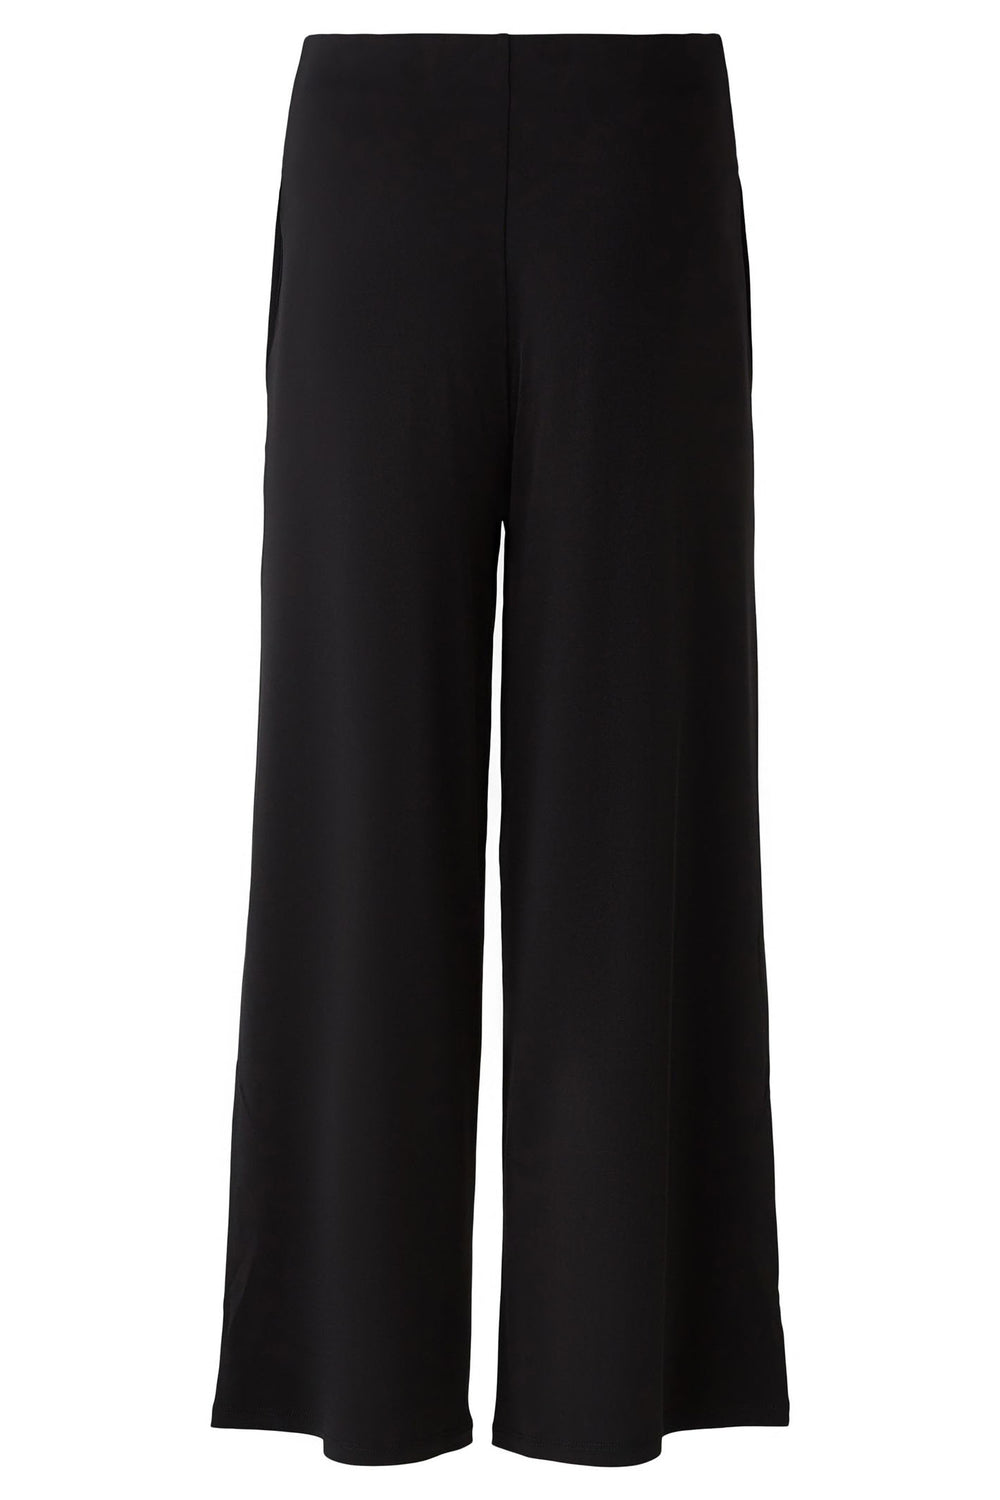 Oui 88391 Black Pull-On Culotte Trousers - Olivia Grace Fashion